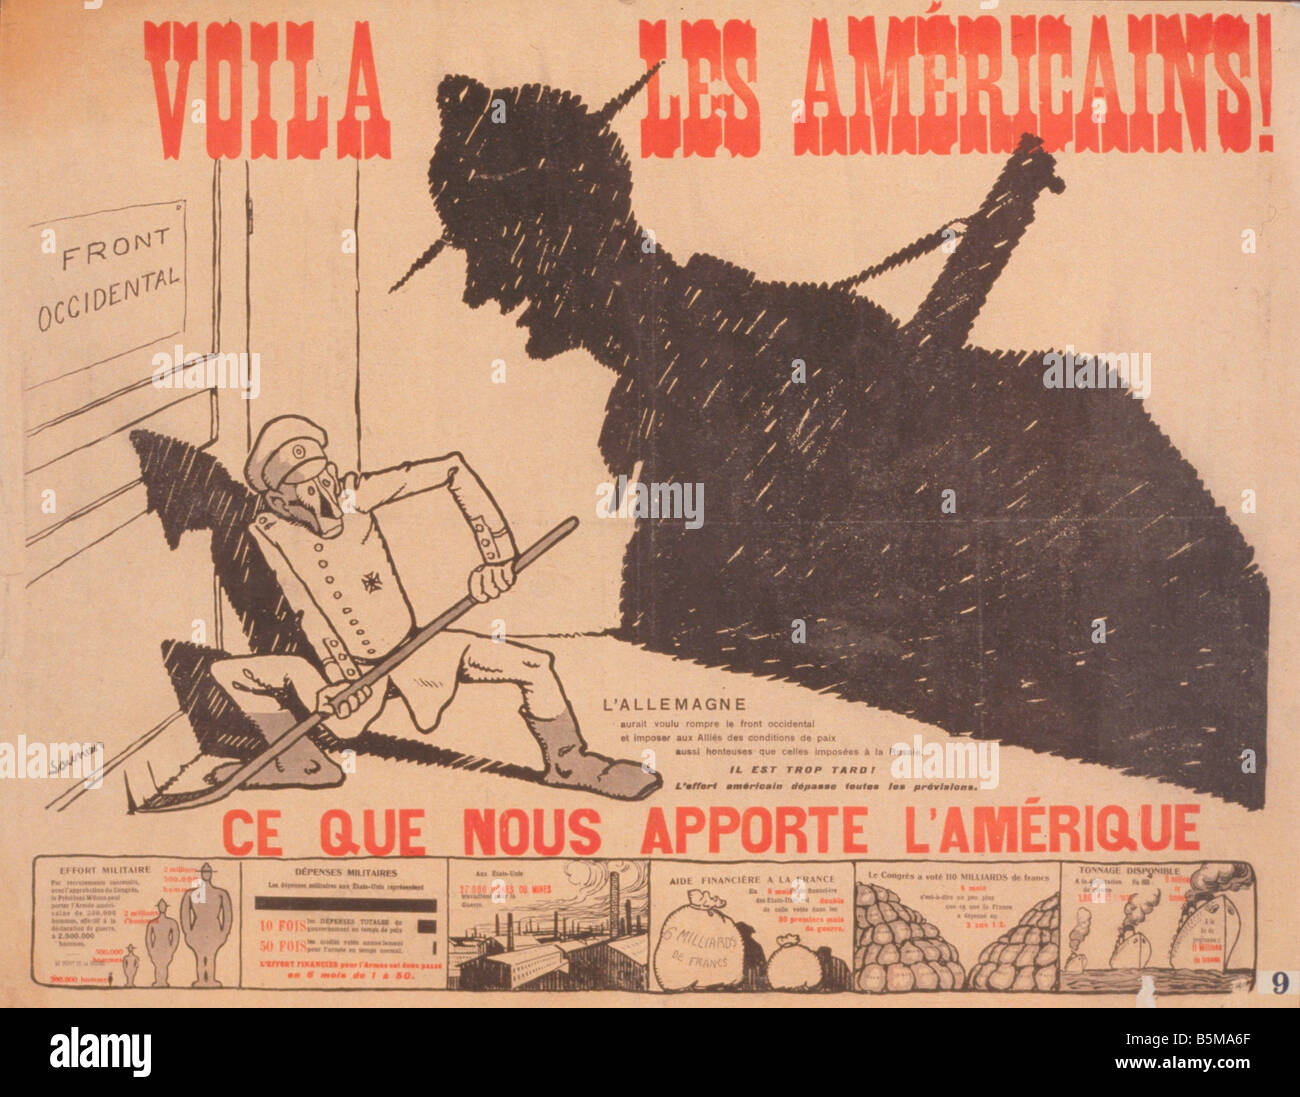 2 G55 P1 1918 41 B Voila les Americains Poster 1918 History World War I Propaganda VOILA LES AM RICAINS French pro paganda on US Stock Photo